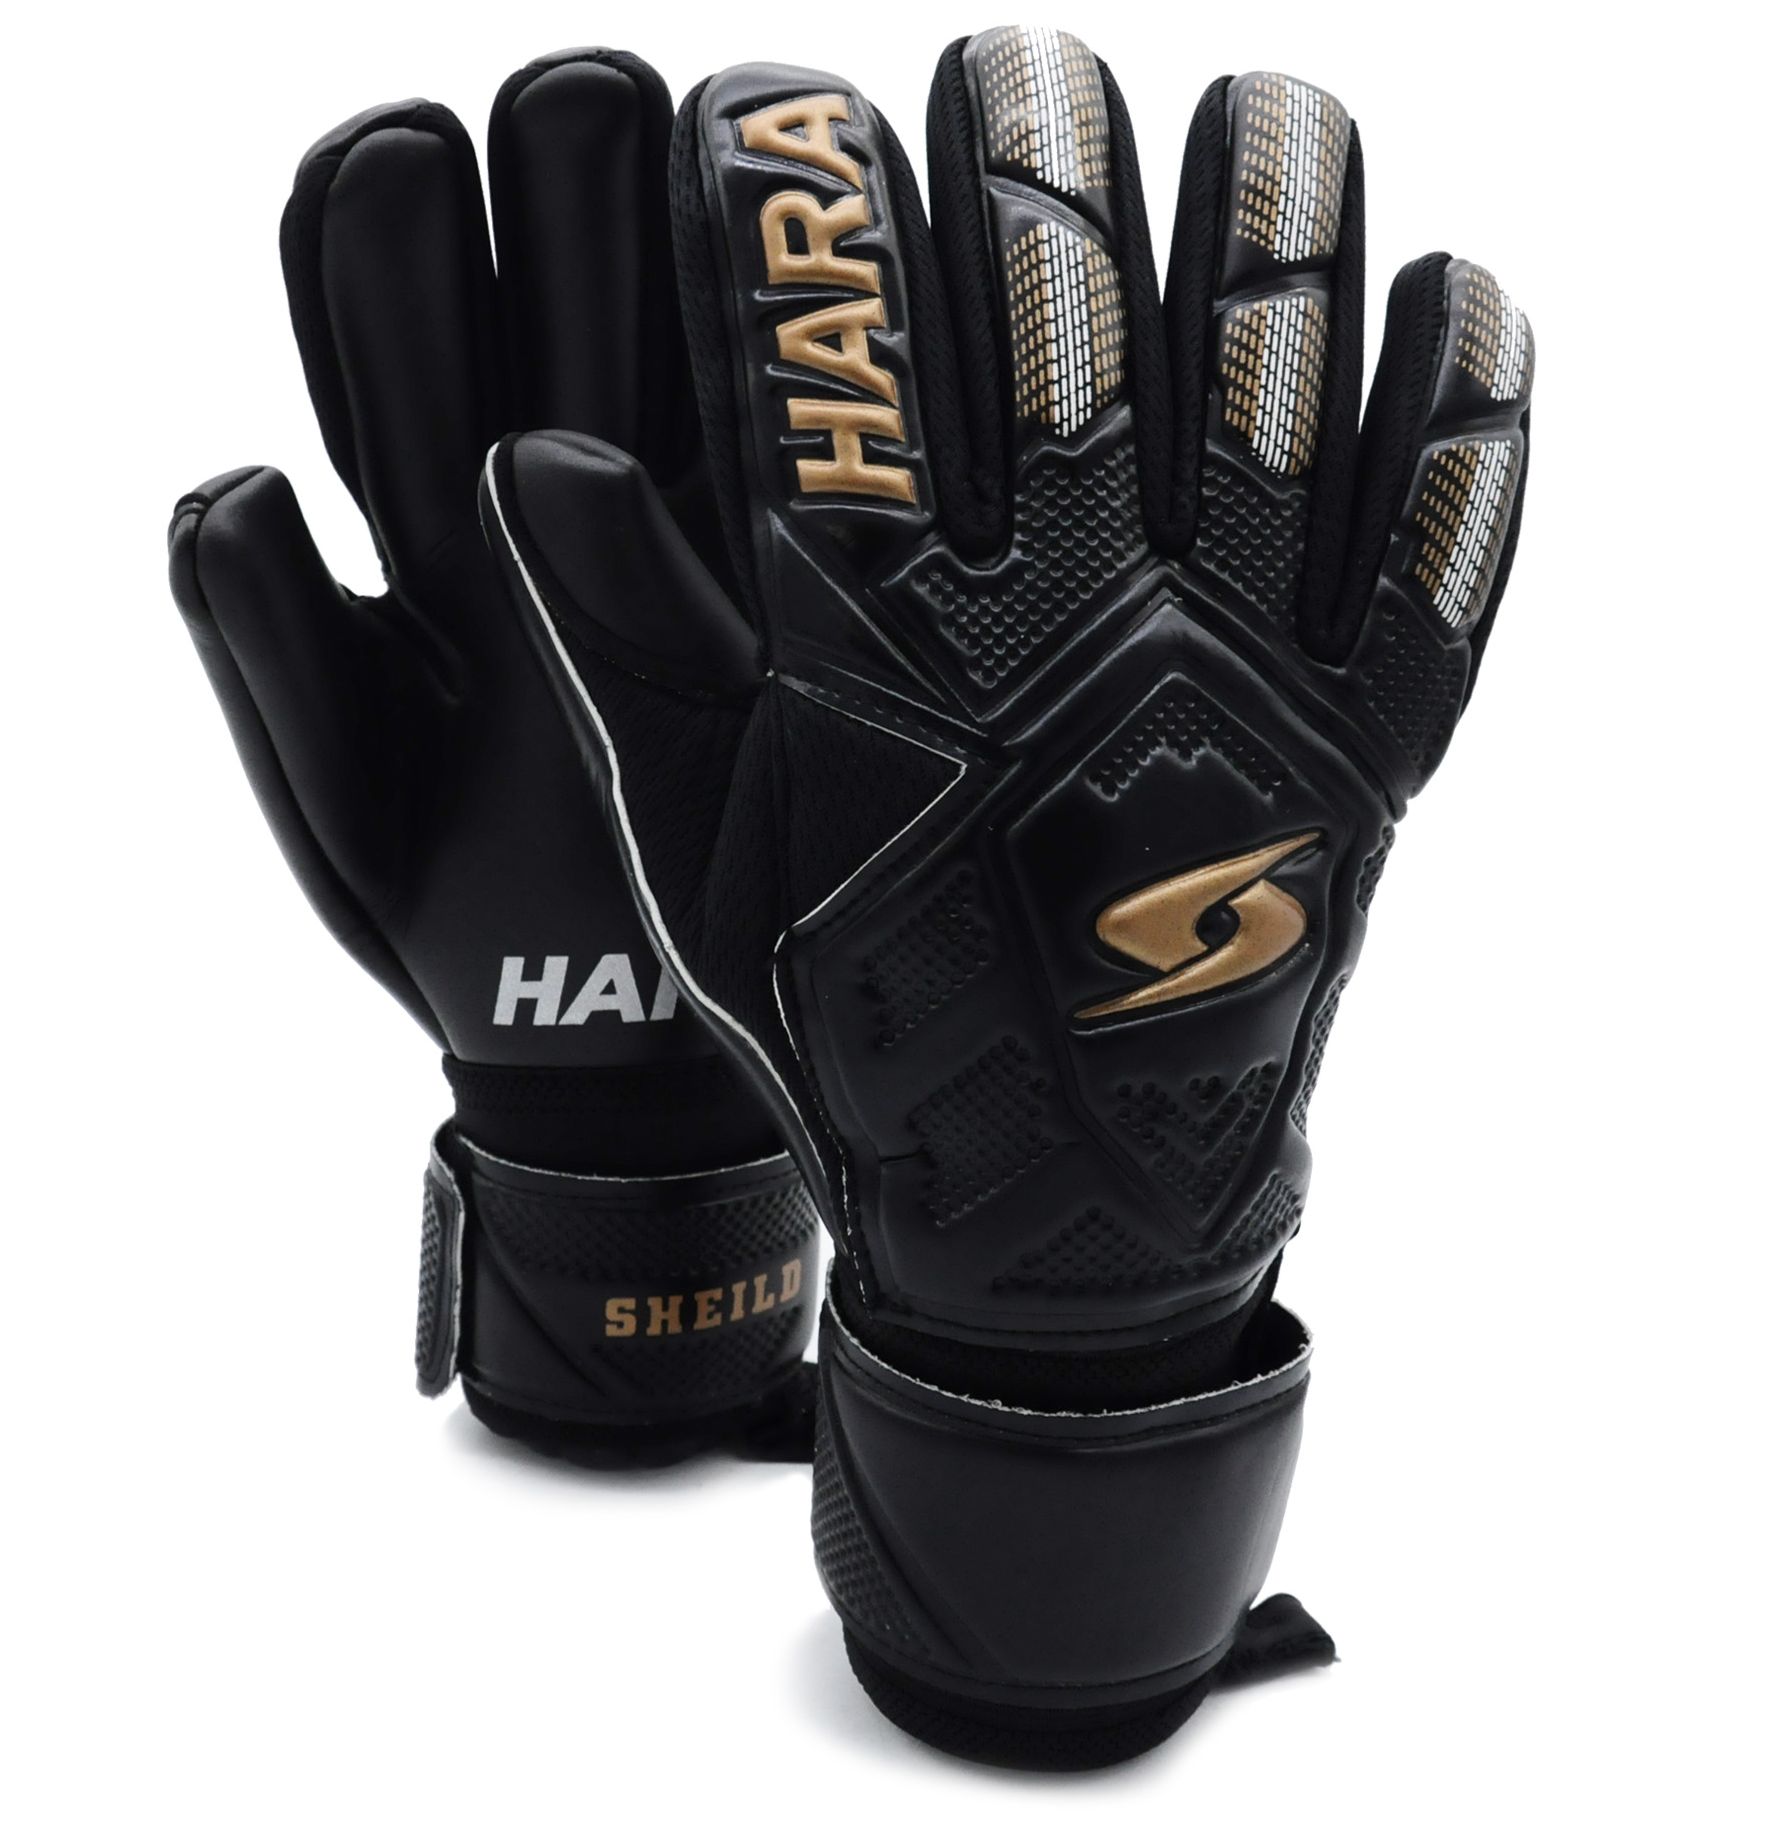 HARA Sports ถุงมือผู้รักษาประตู ระดับอาชีพ ฟิงเกอร์เซฟถอดได้ ถุงมือฟุตบอล สีดำ-ทอง